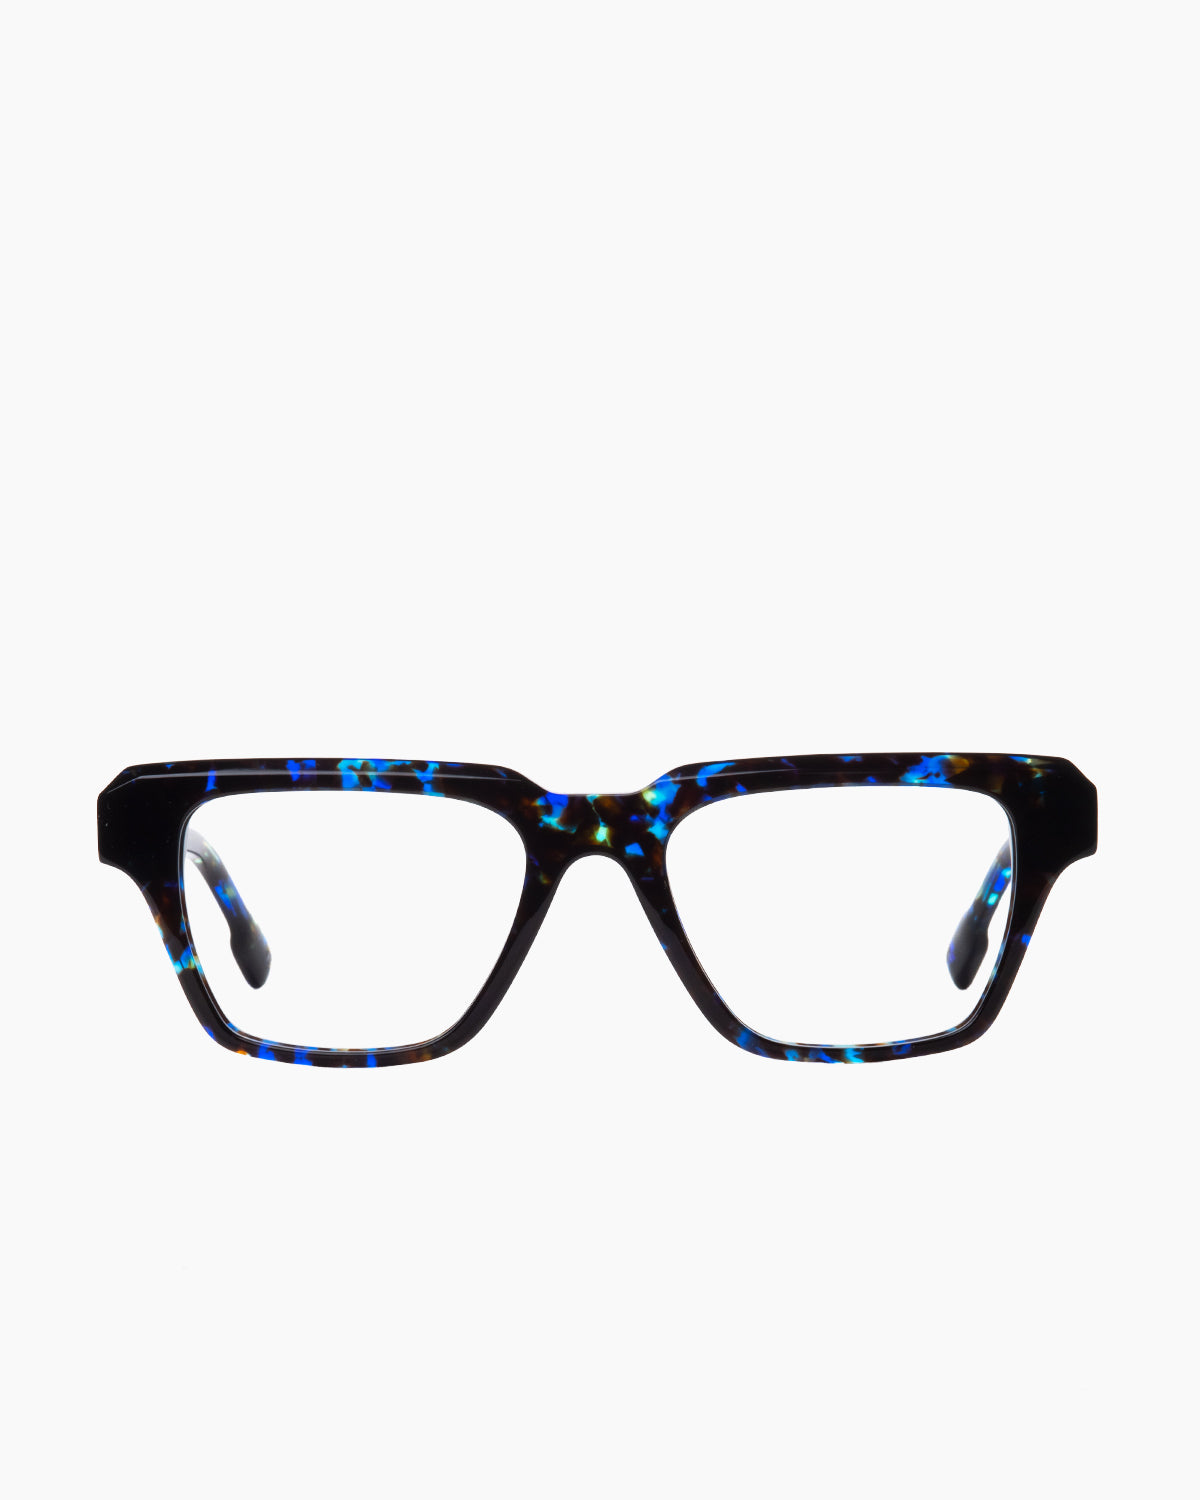 Spectacleeyeworks - Brad - c716 | Bar à lunettes:  Marie-Sophie Dion